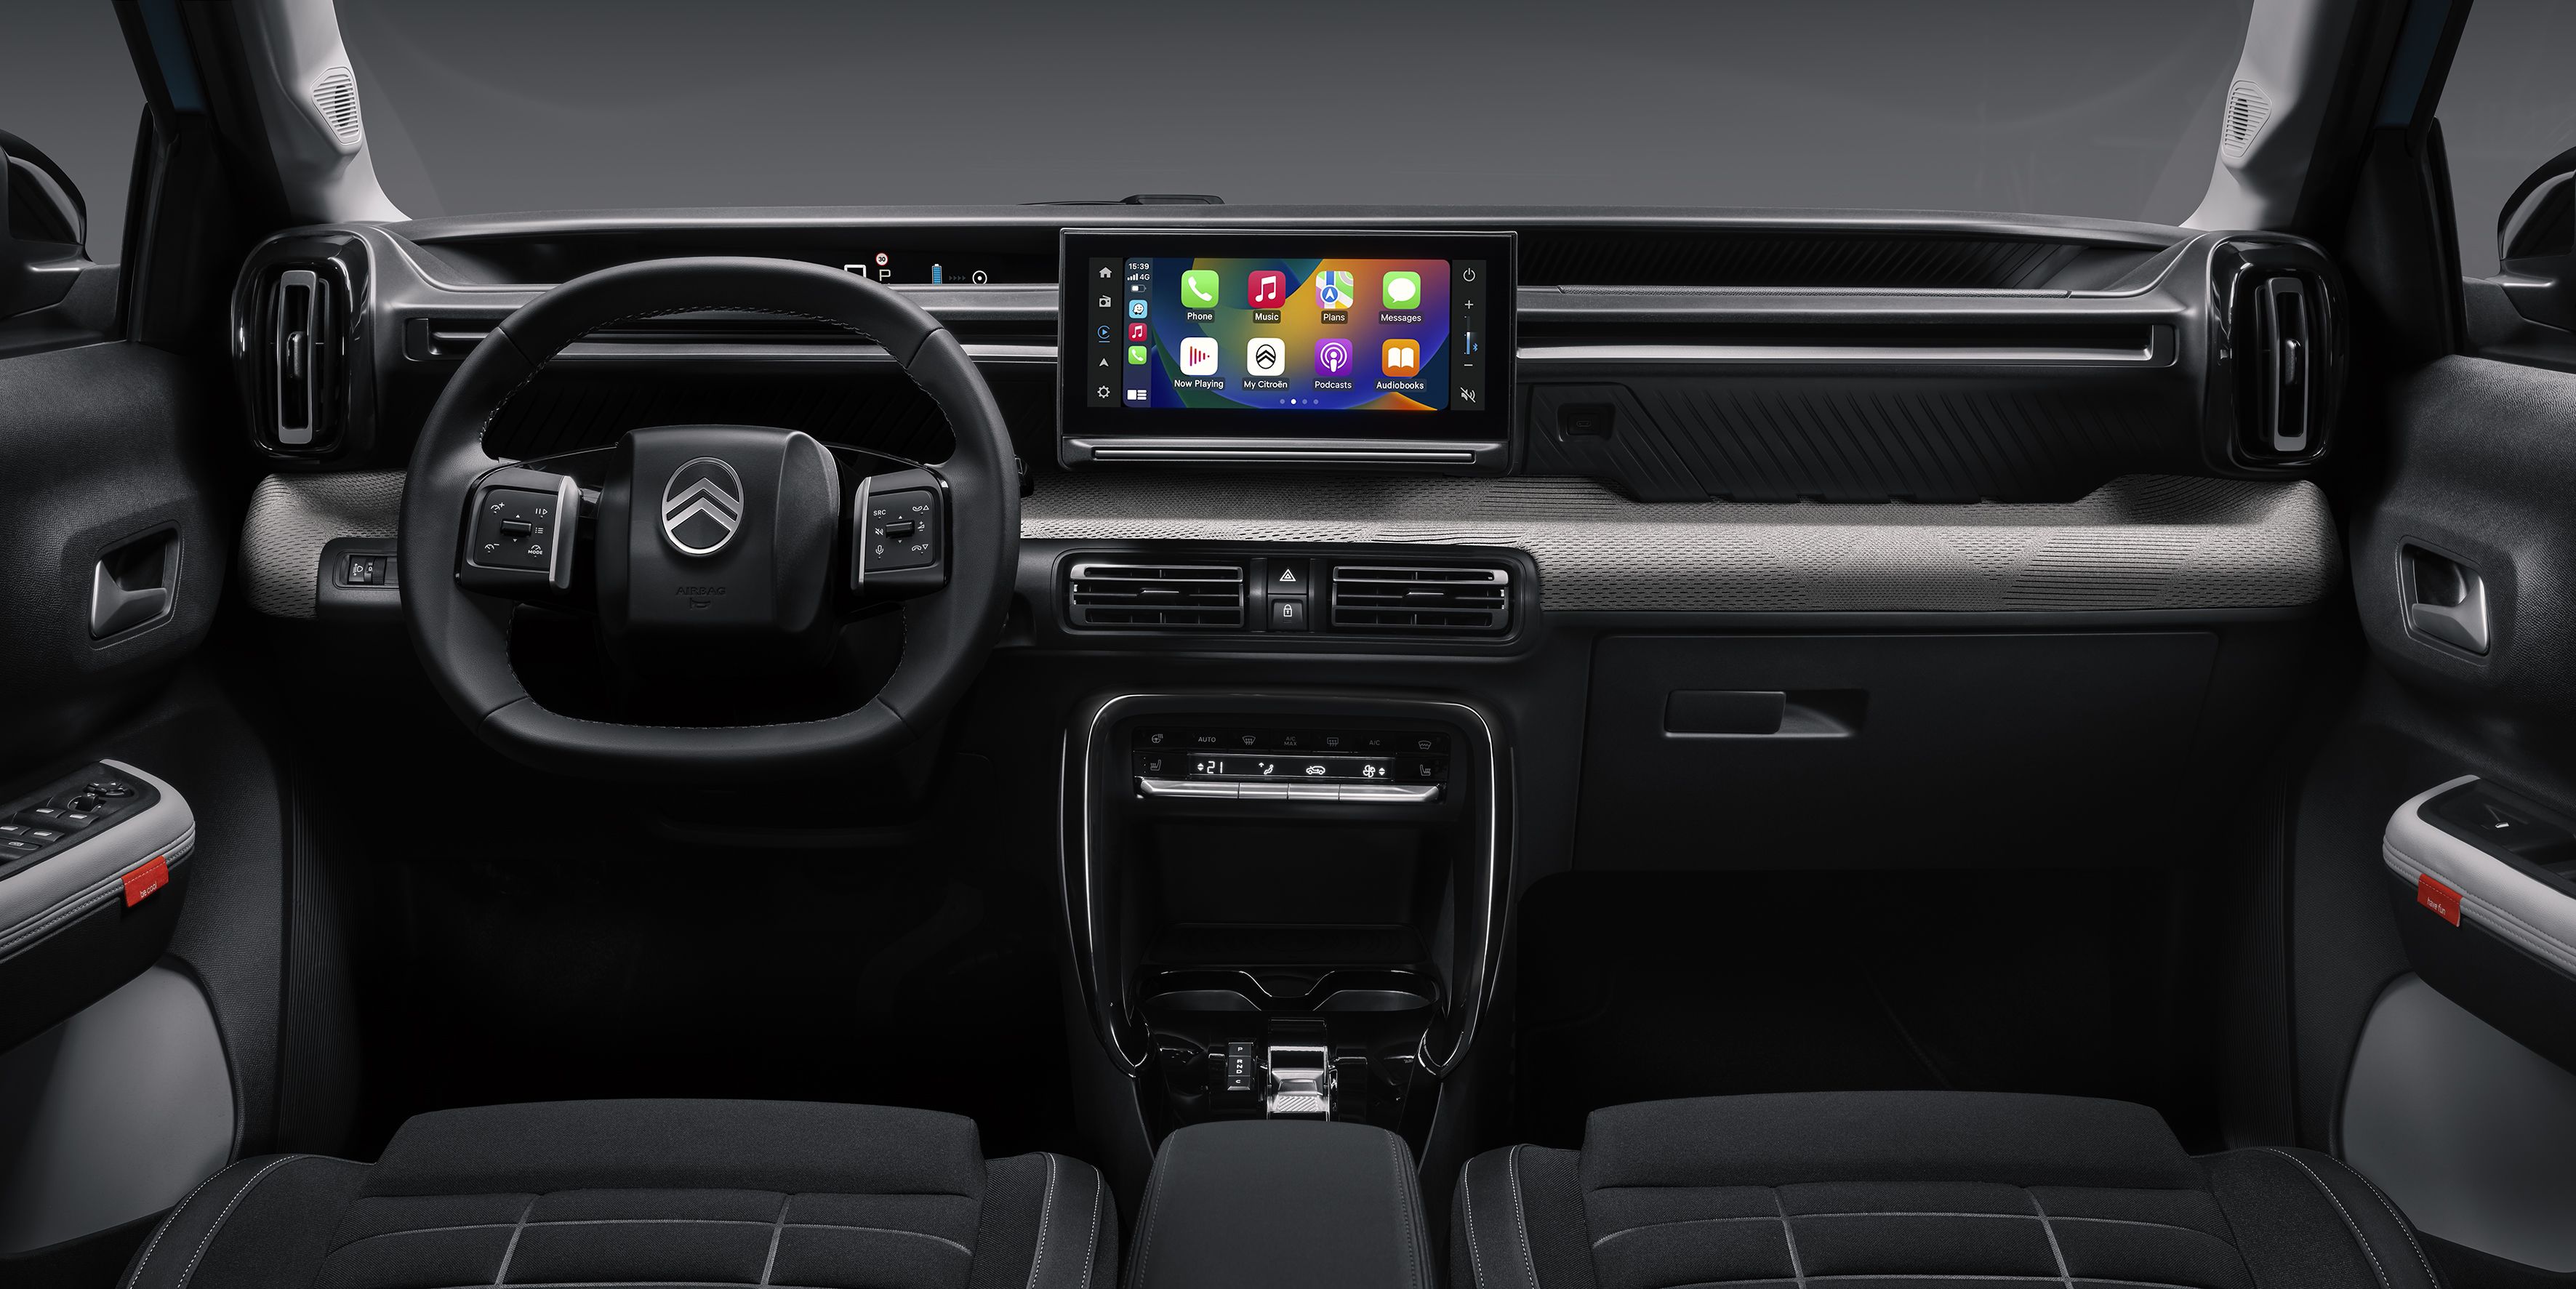 Citroën C3, la firma revela nuevos detalles del interior